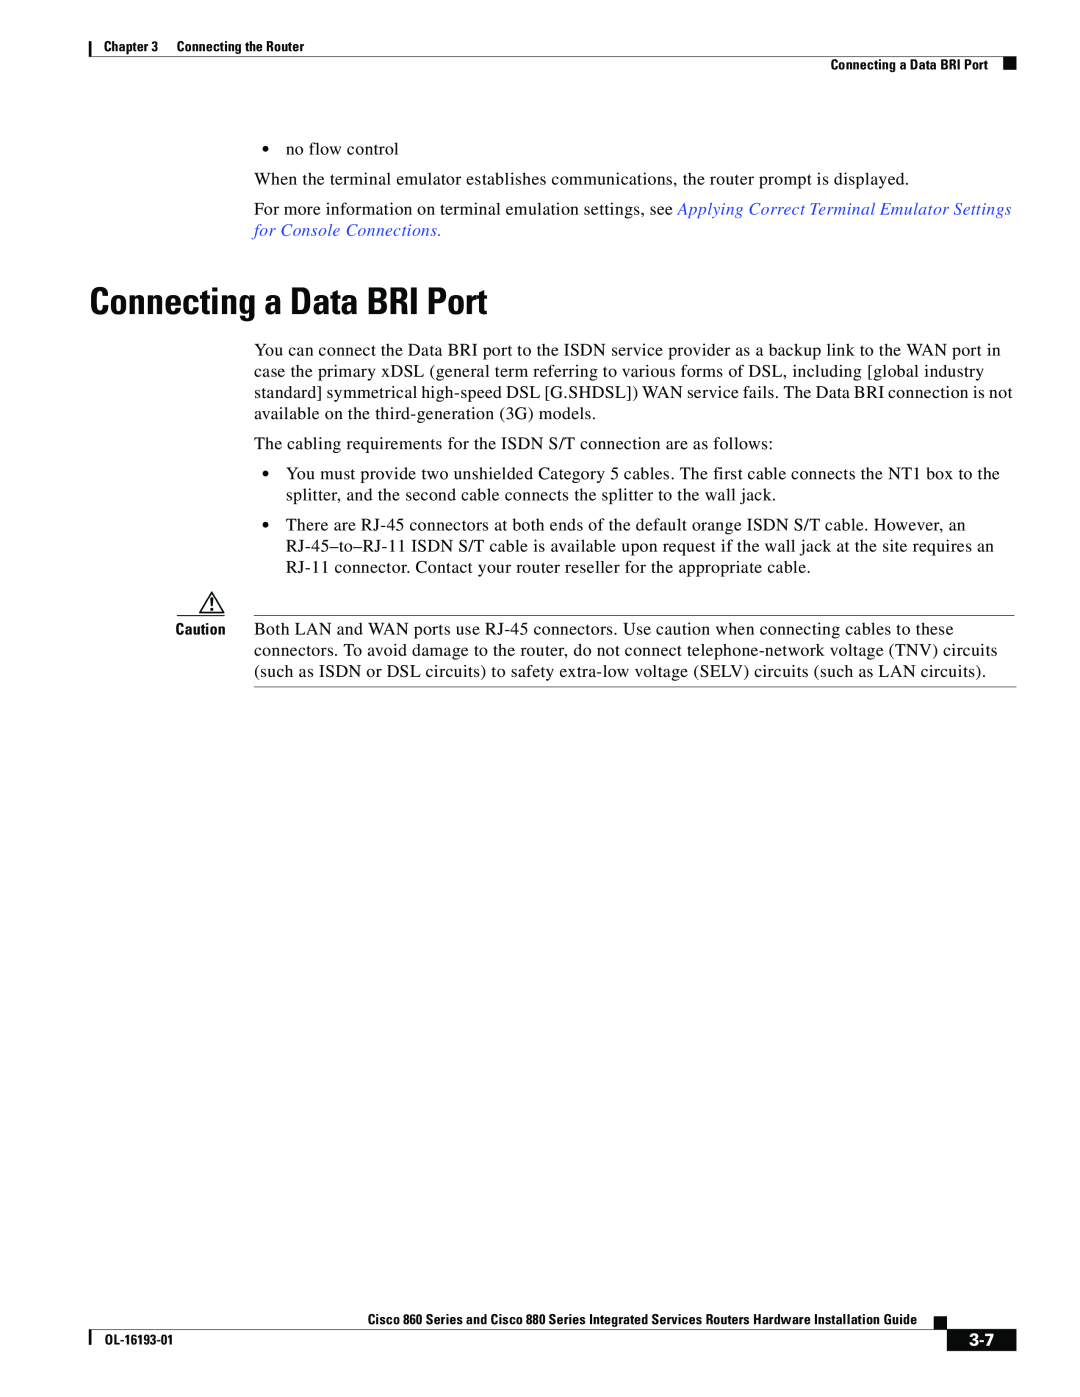 Cisco Systems HIG880, C892FSPK9, 861WGNPK9RF, 860 manual Connecting a Data BRI Port 